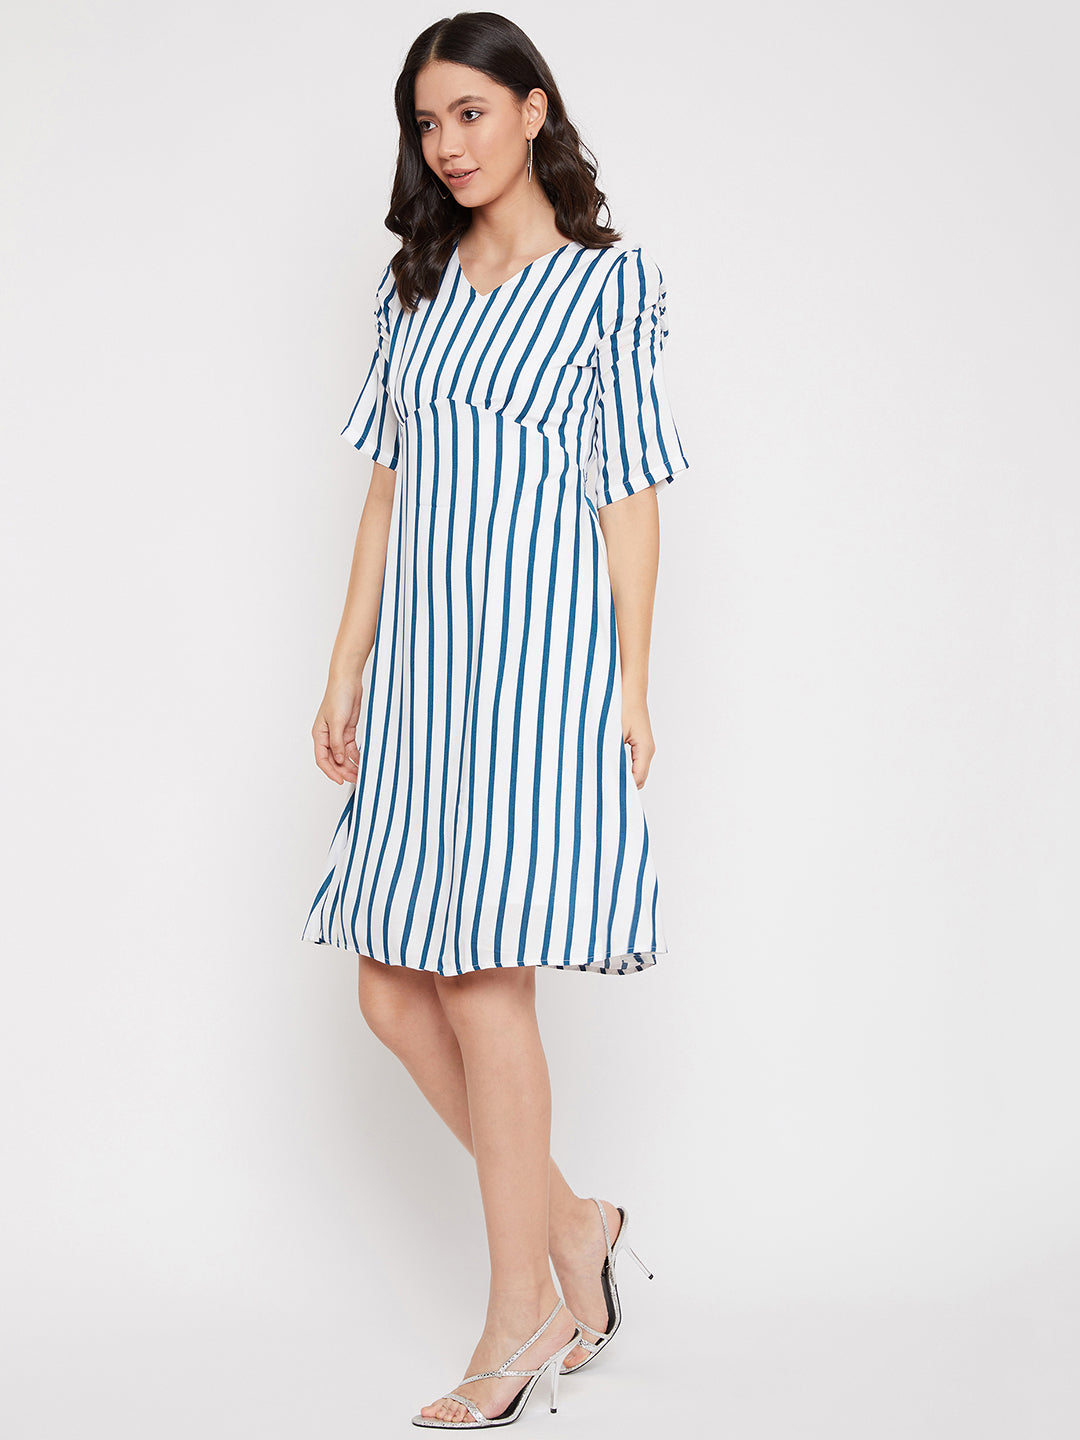 Blue and White Striped Empire Dress - Women Dresses